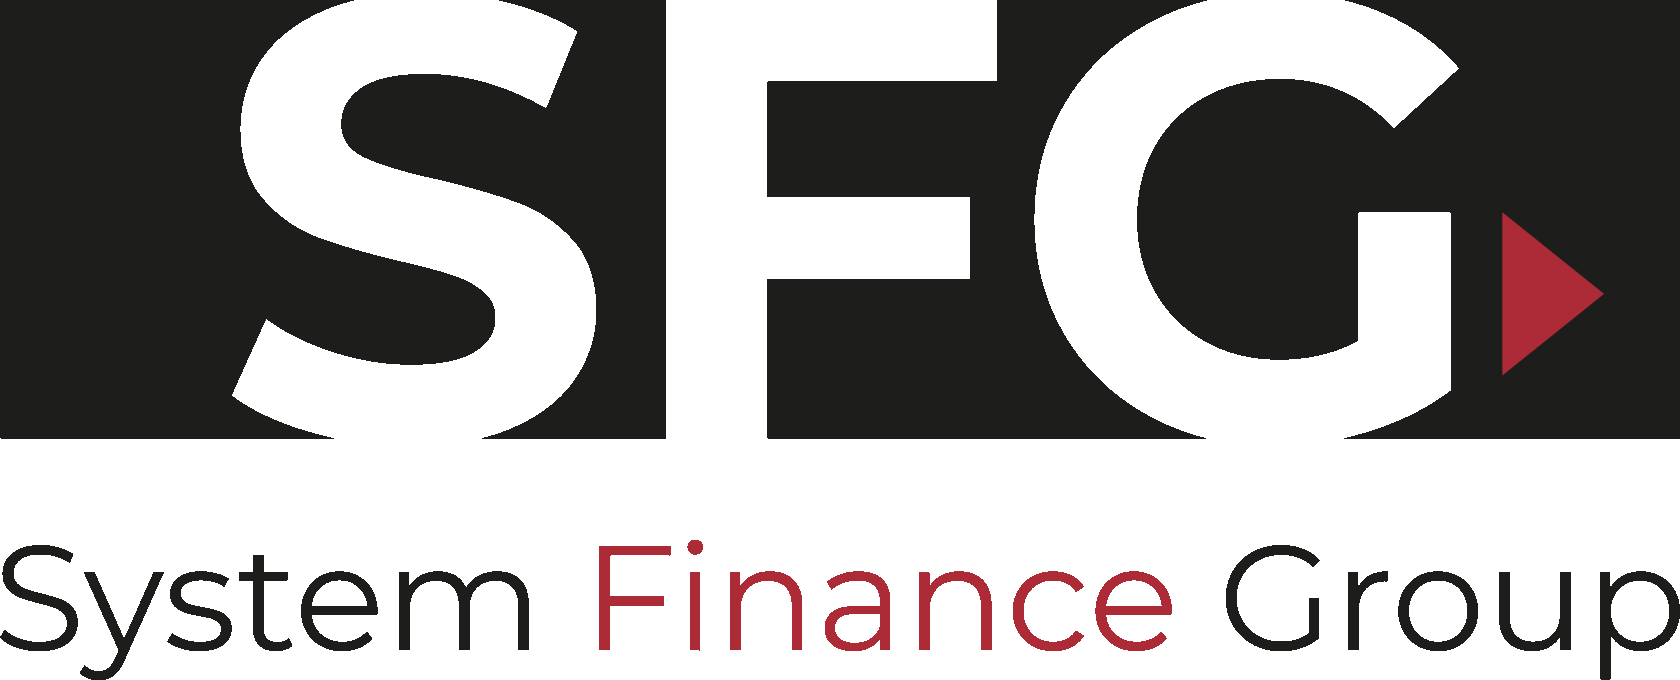 Finance Group. ИП Ткаченко логотип. Логотип Prestige Finance Group. Q Systems компания jpg. Q systems